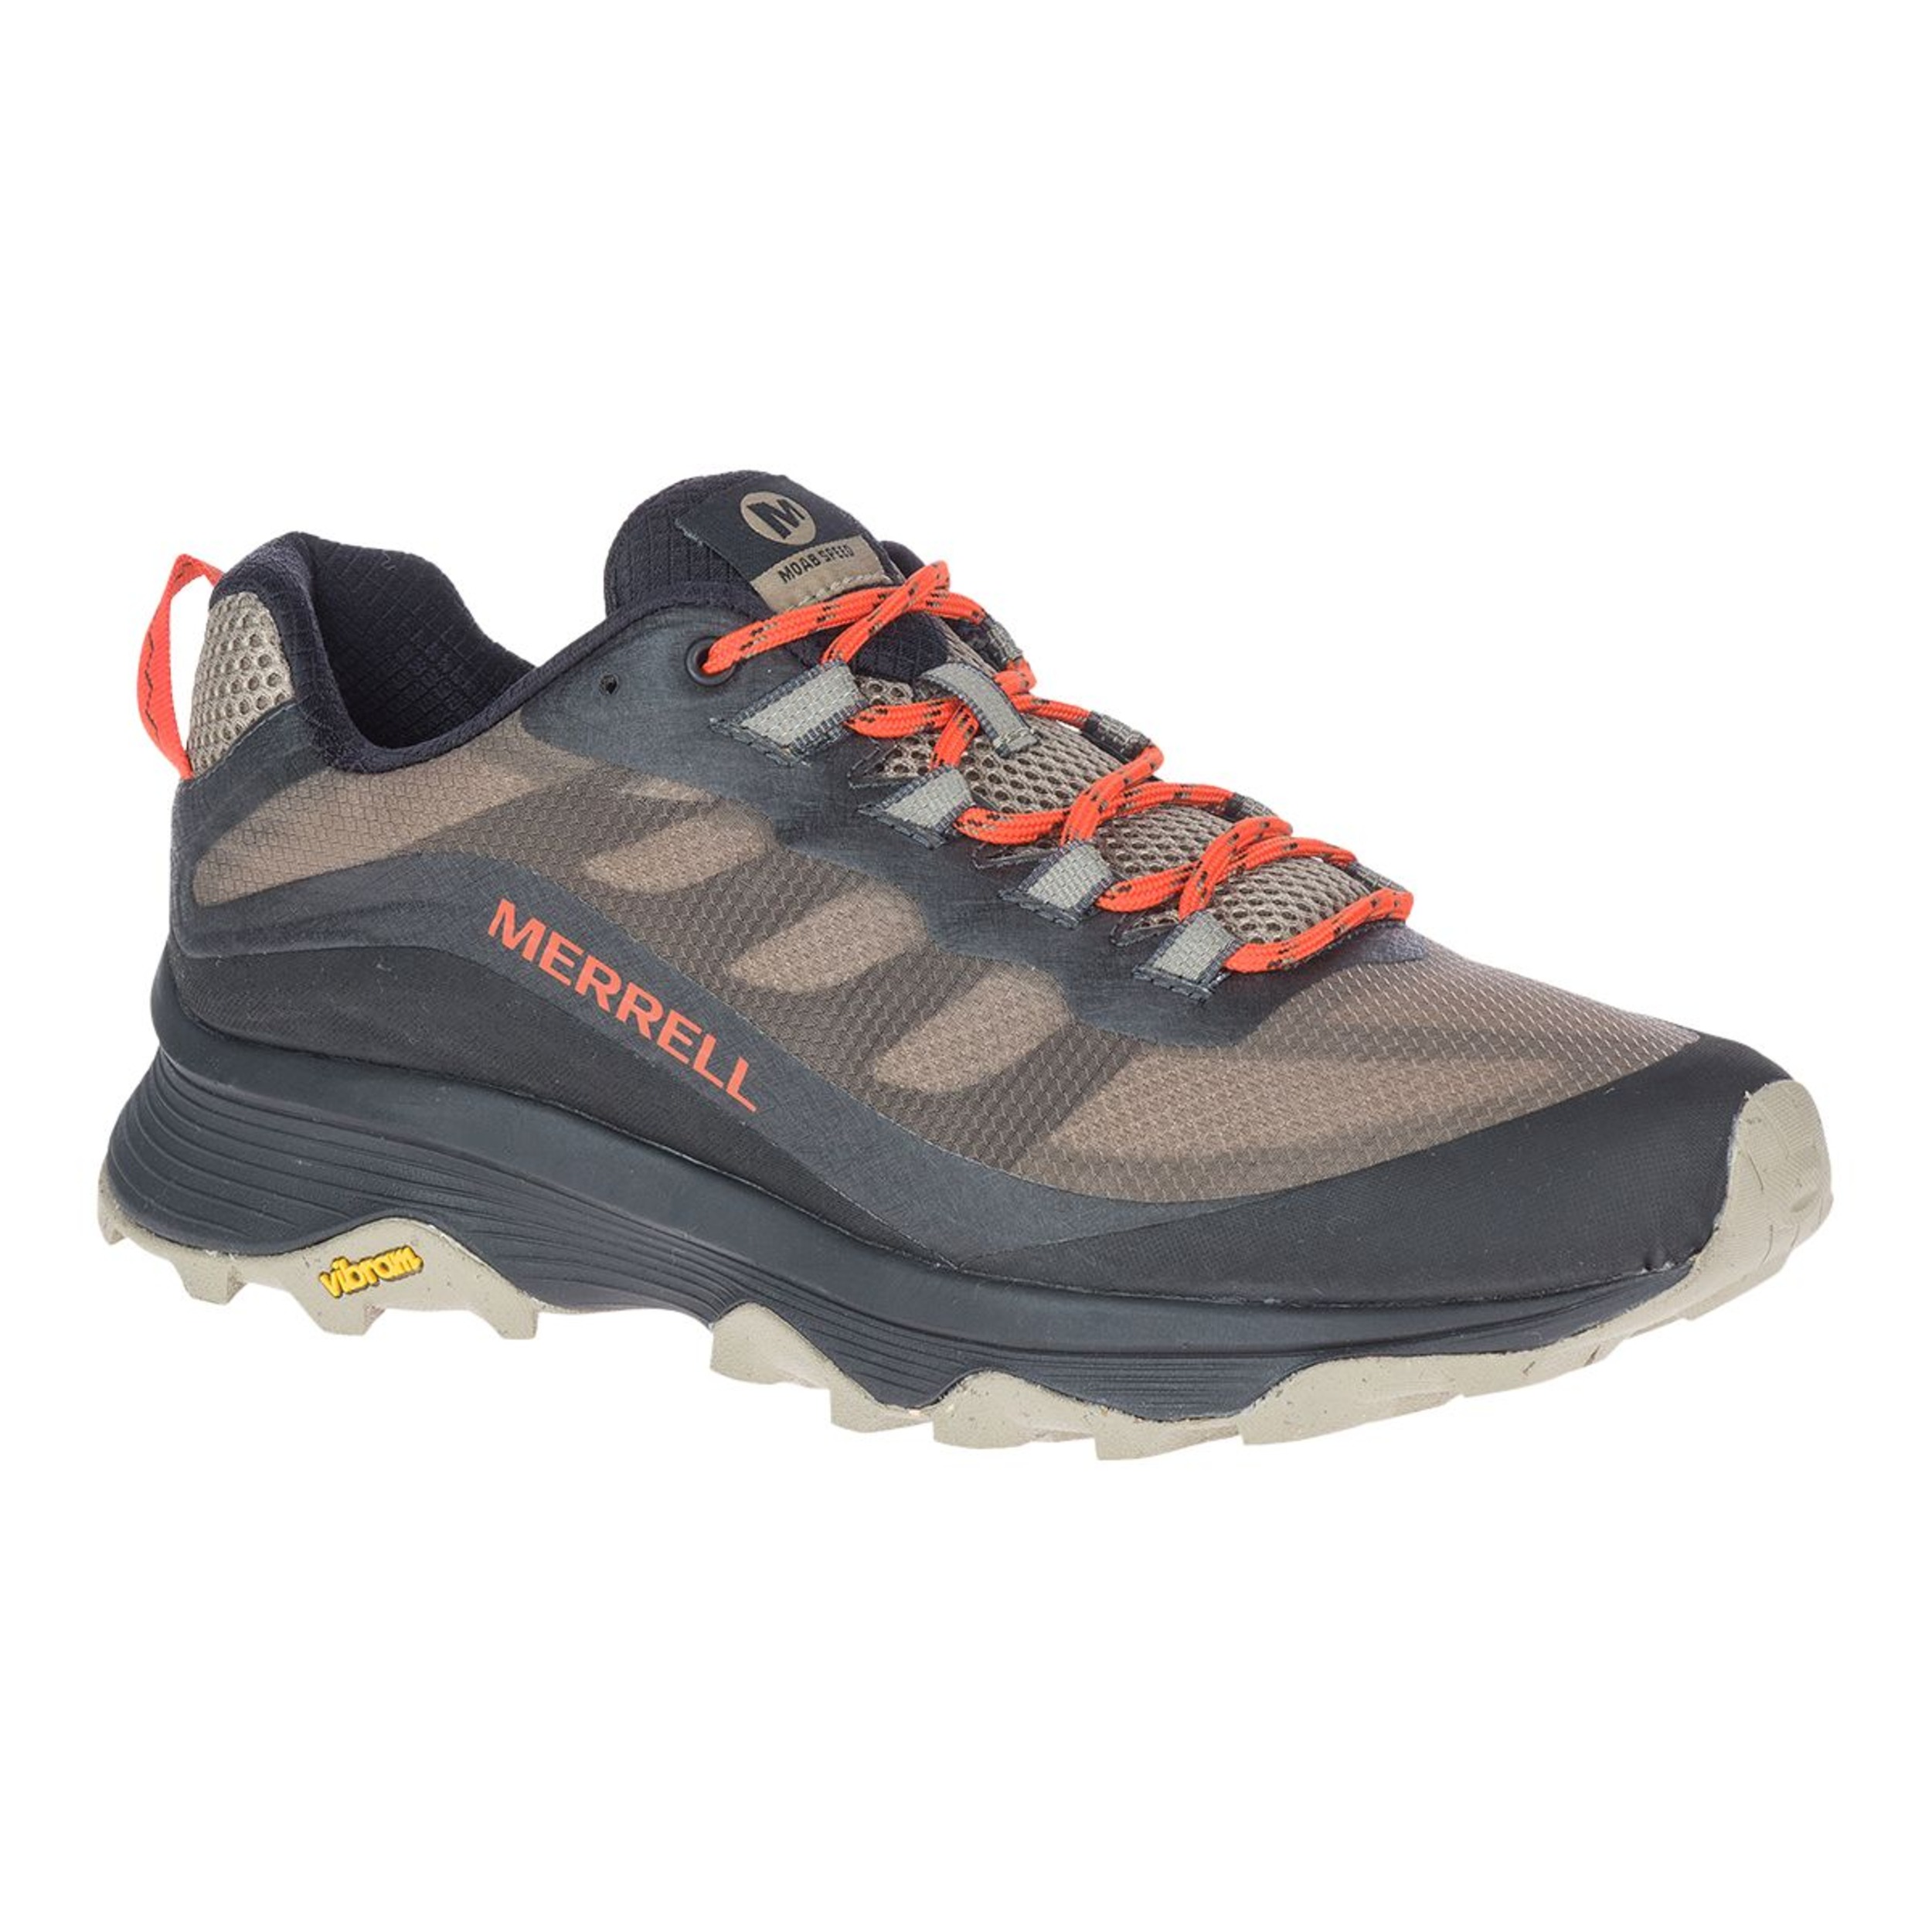 Merrell Men's Moab Speed Hiking Shoes, Lightweight $69.98